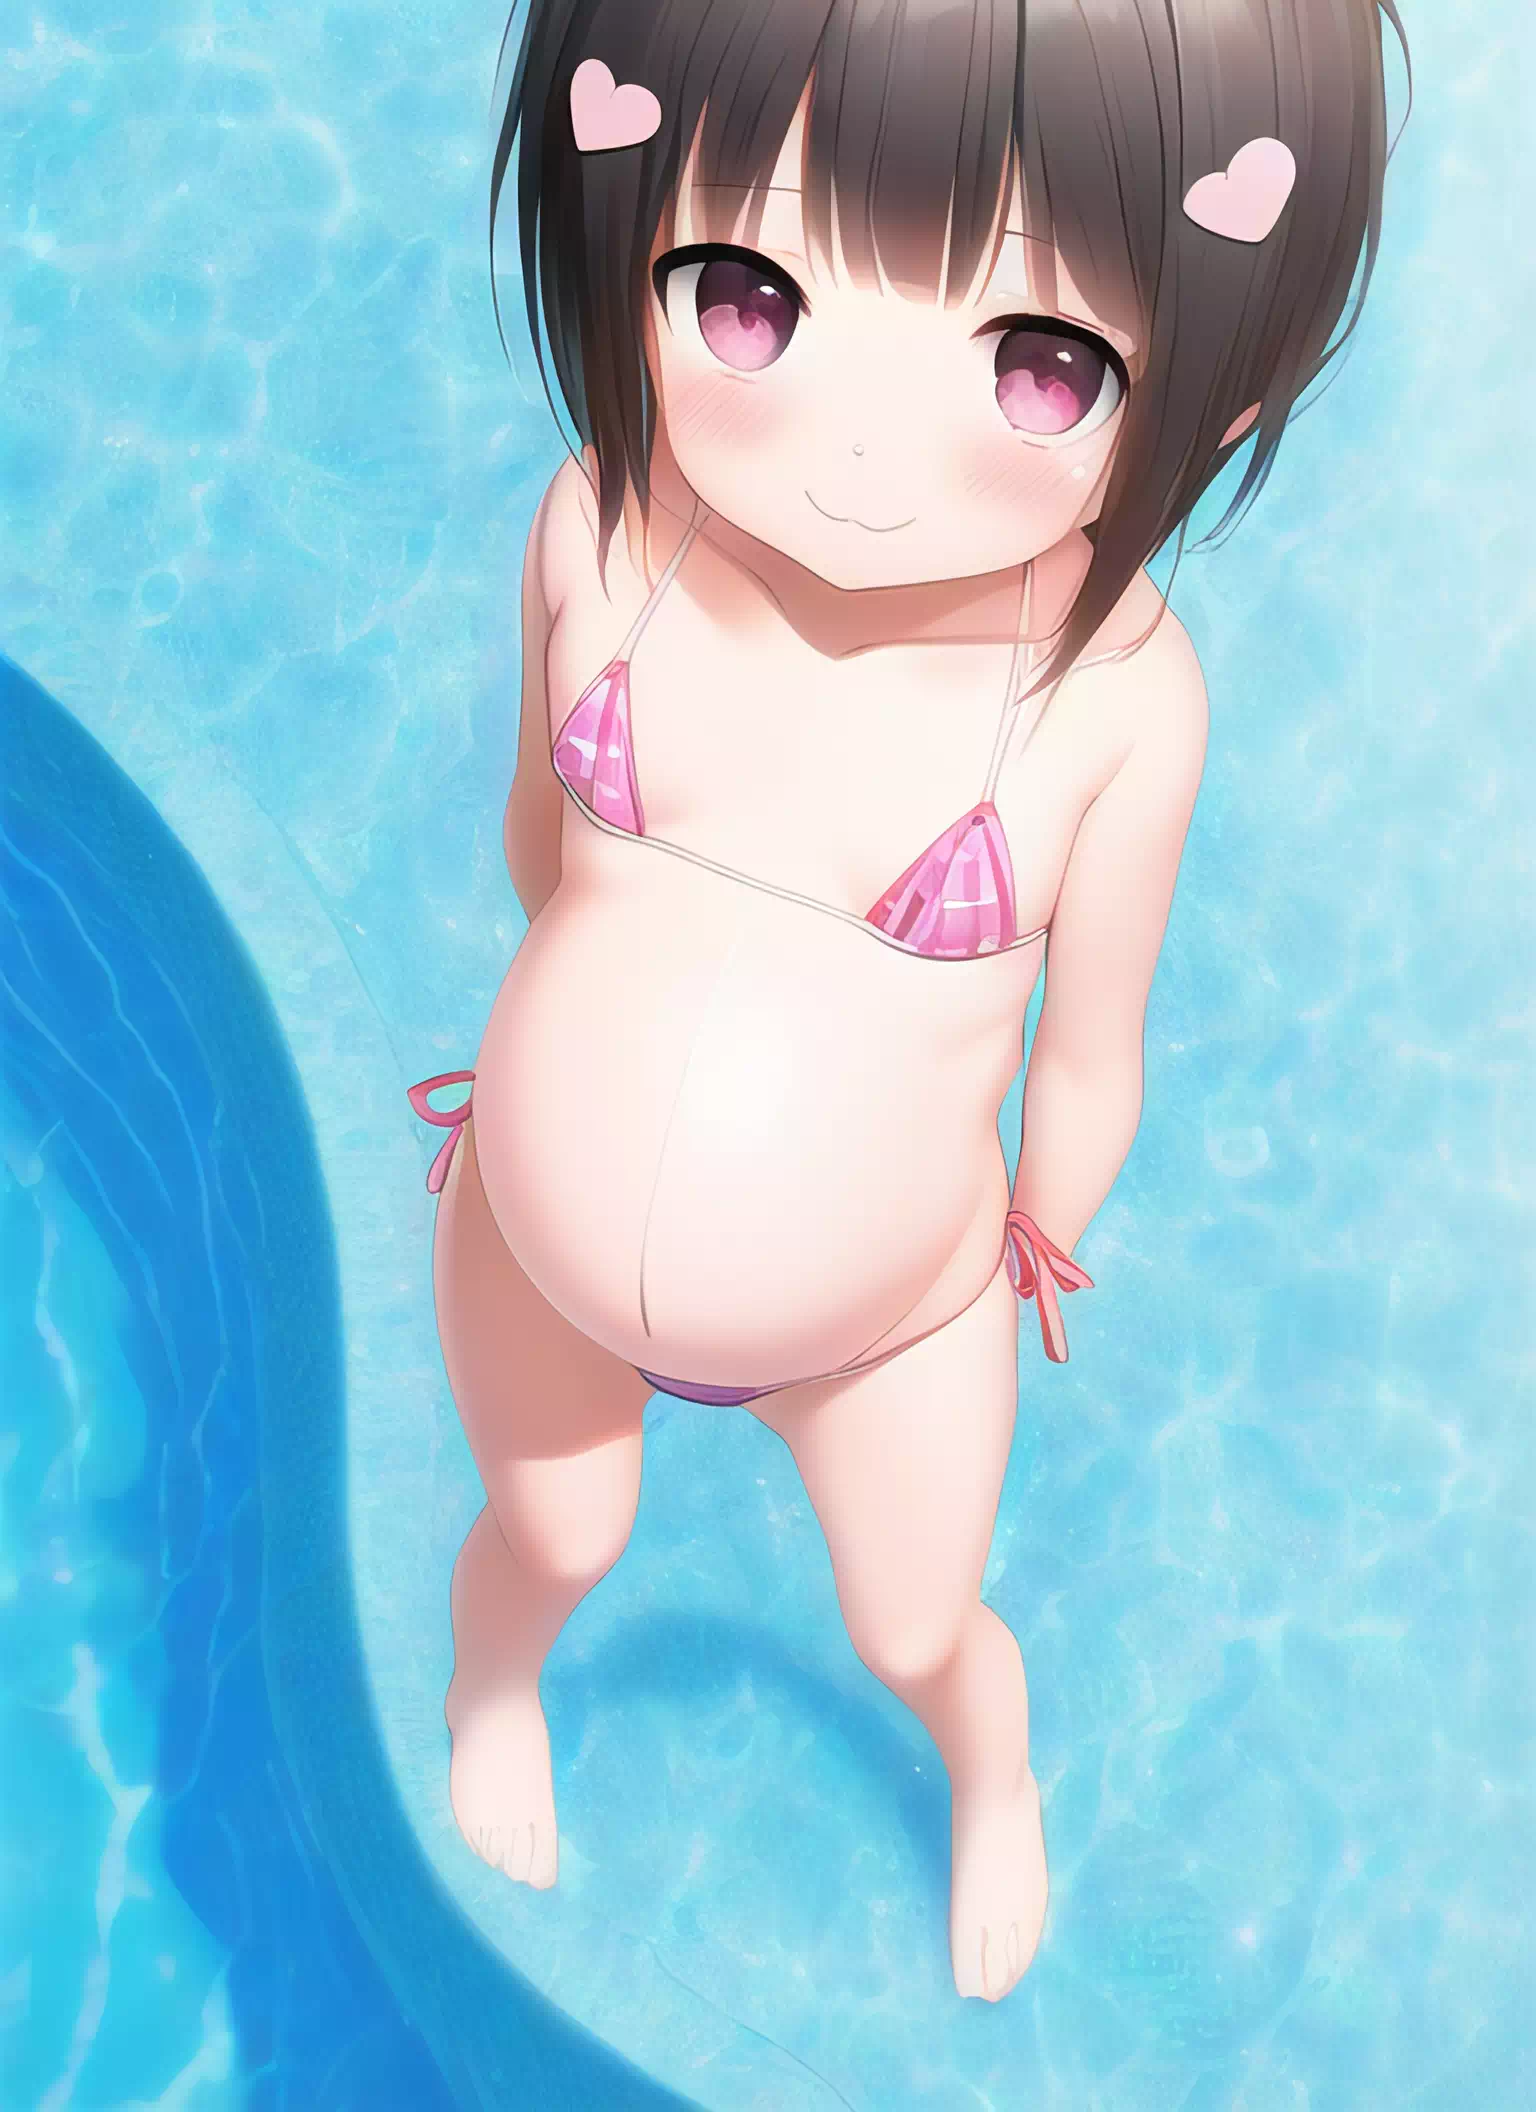 pregnant loli enoying the pool